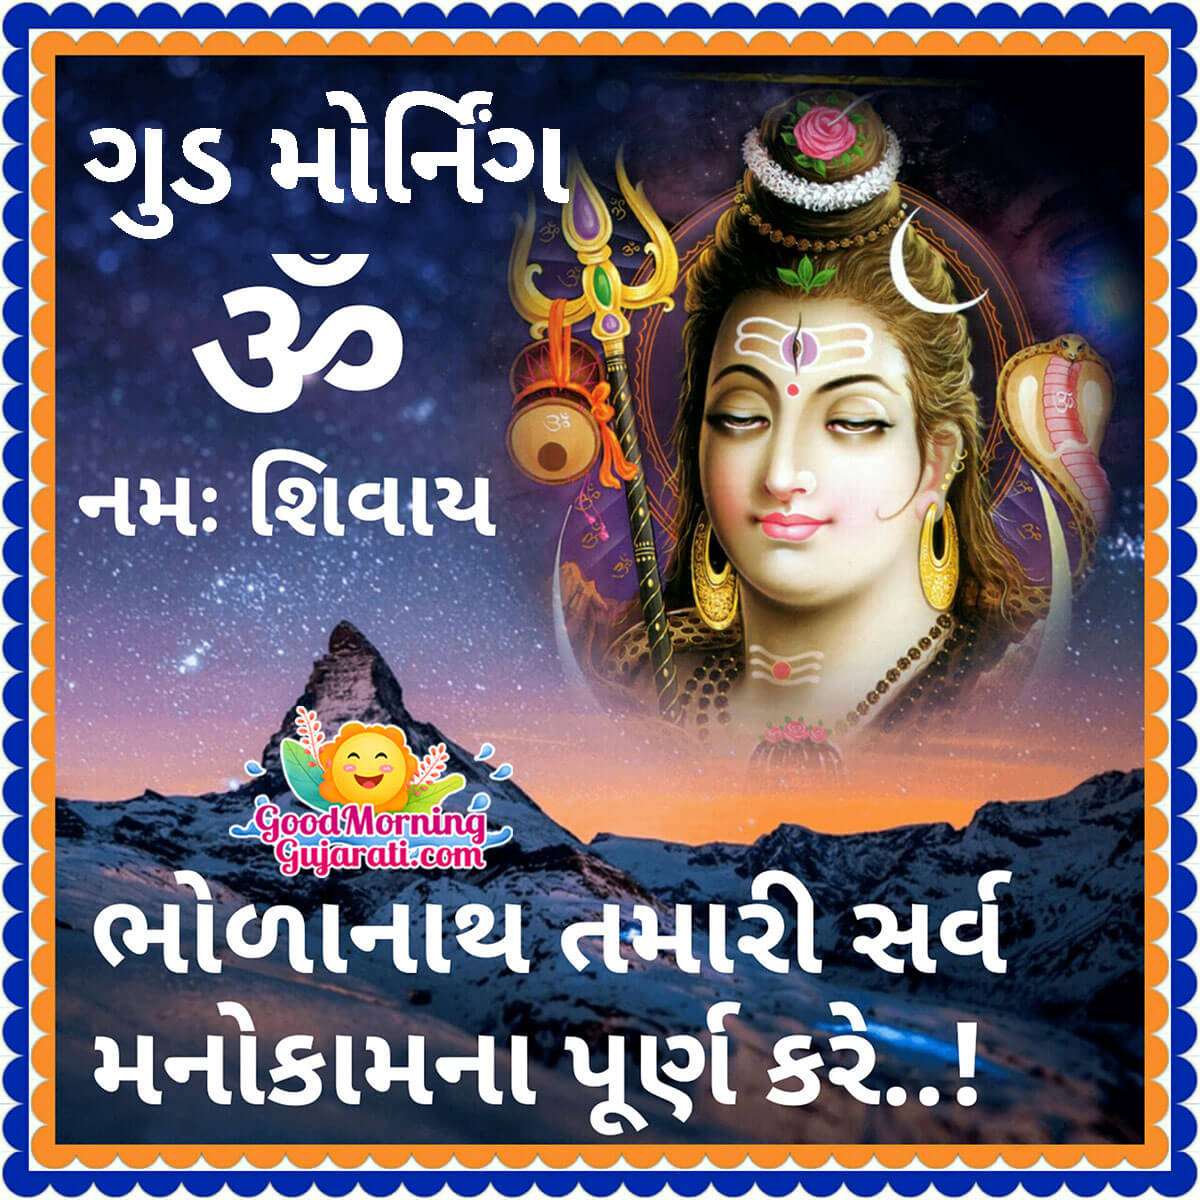 Good Morning Bholenath Wish In Gujarati